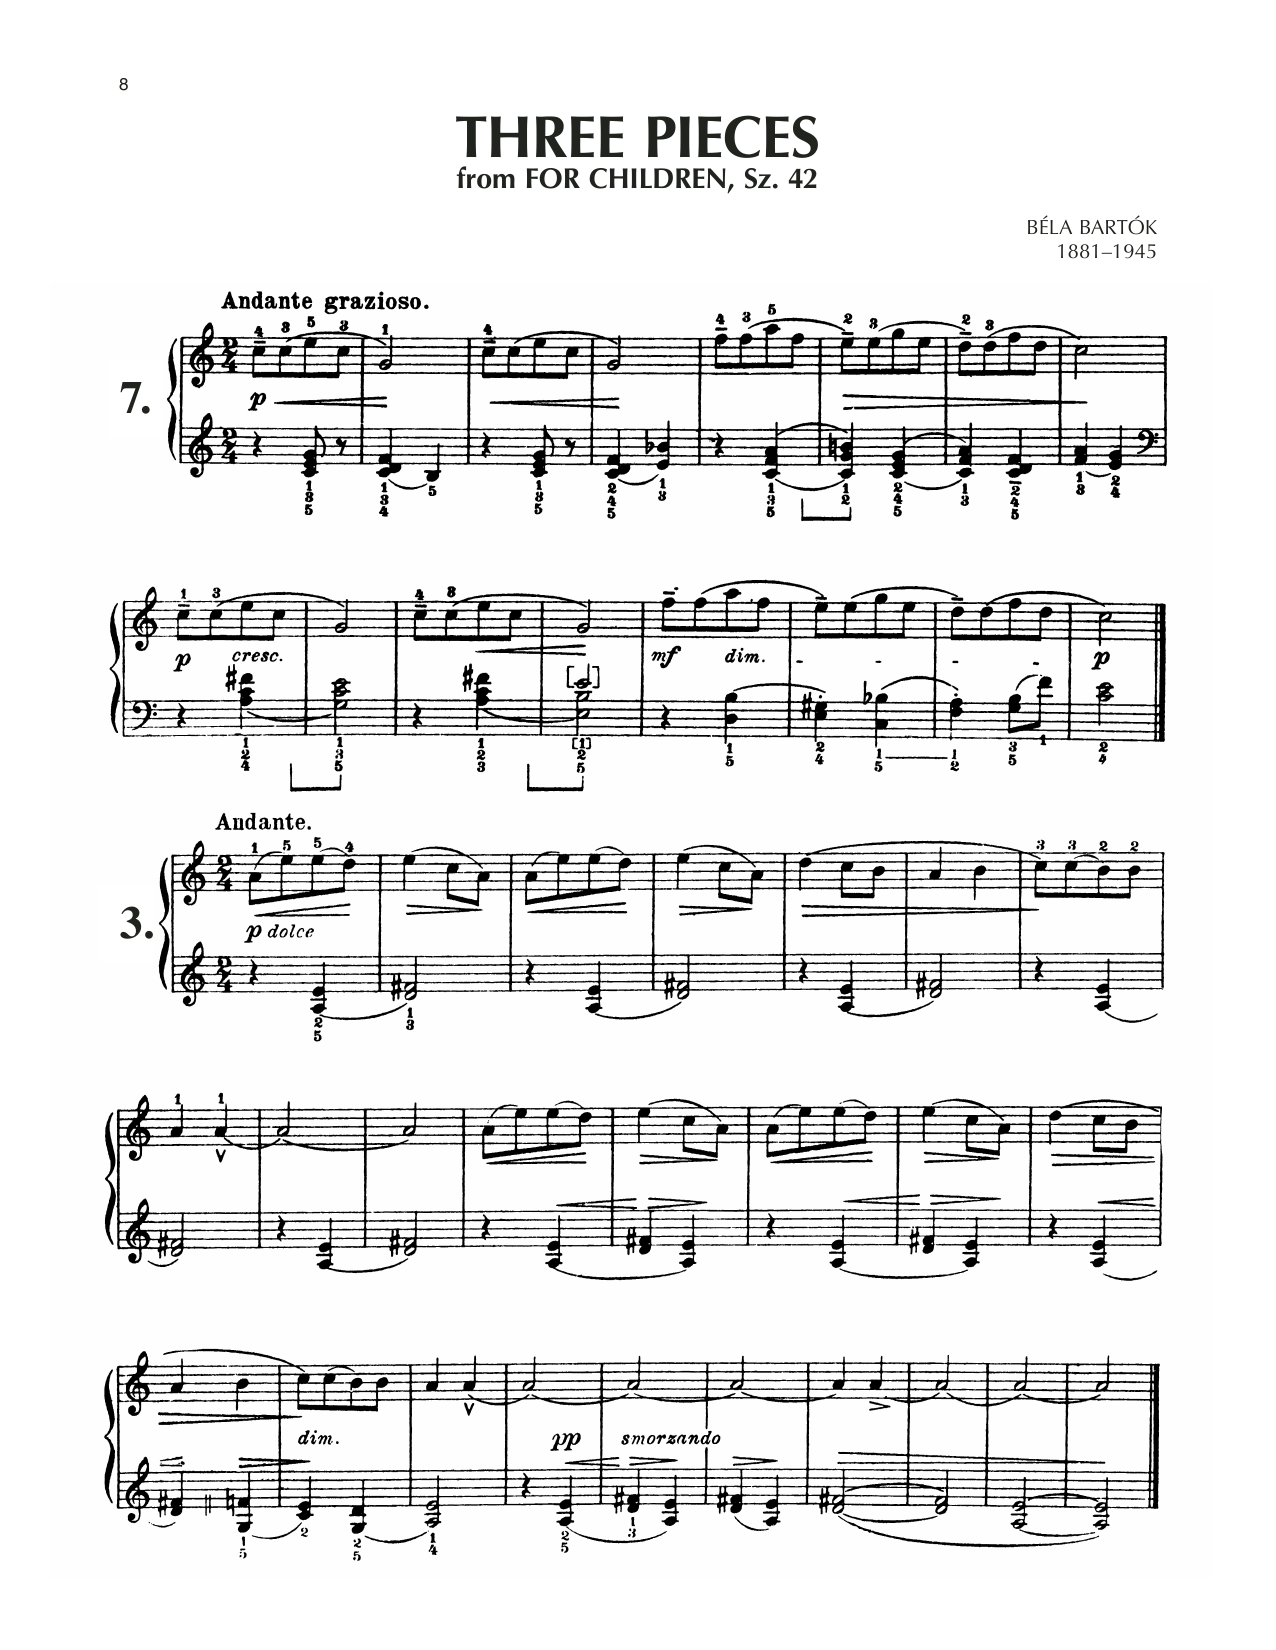 Béla Bartók Andante Grazioso, Sz. 42, No. 7 Sheet Music Notes & Chords for Piano Solo - Download or Print PDF